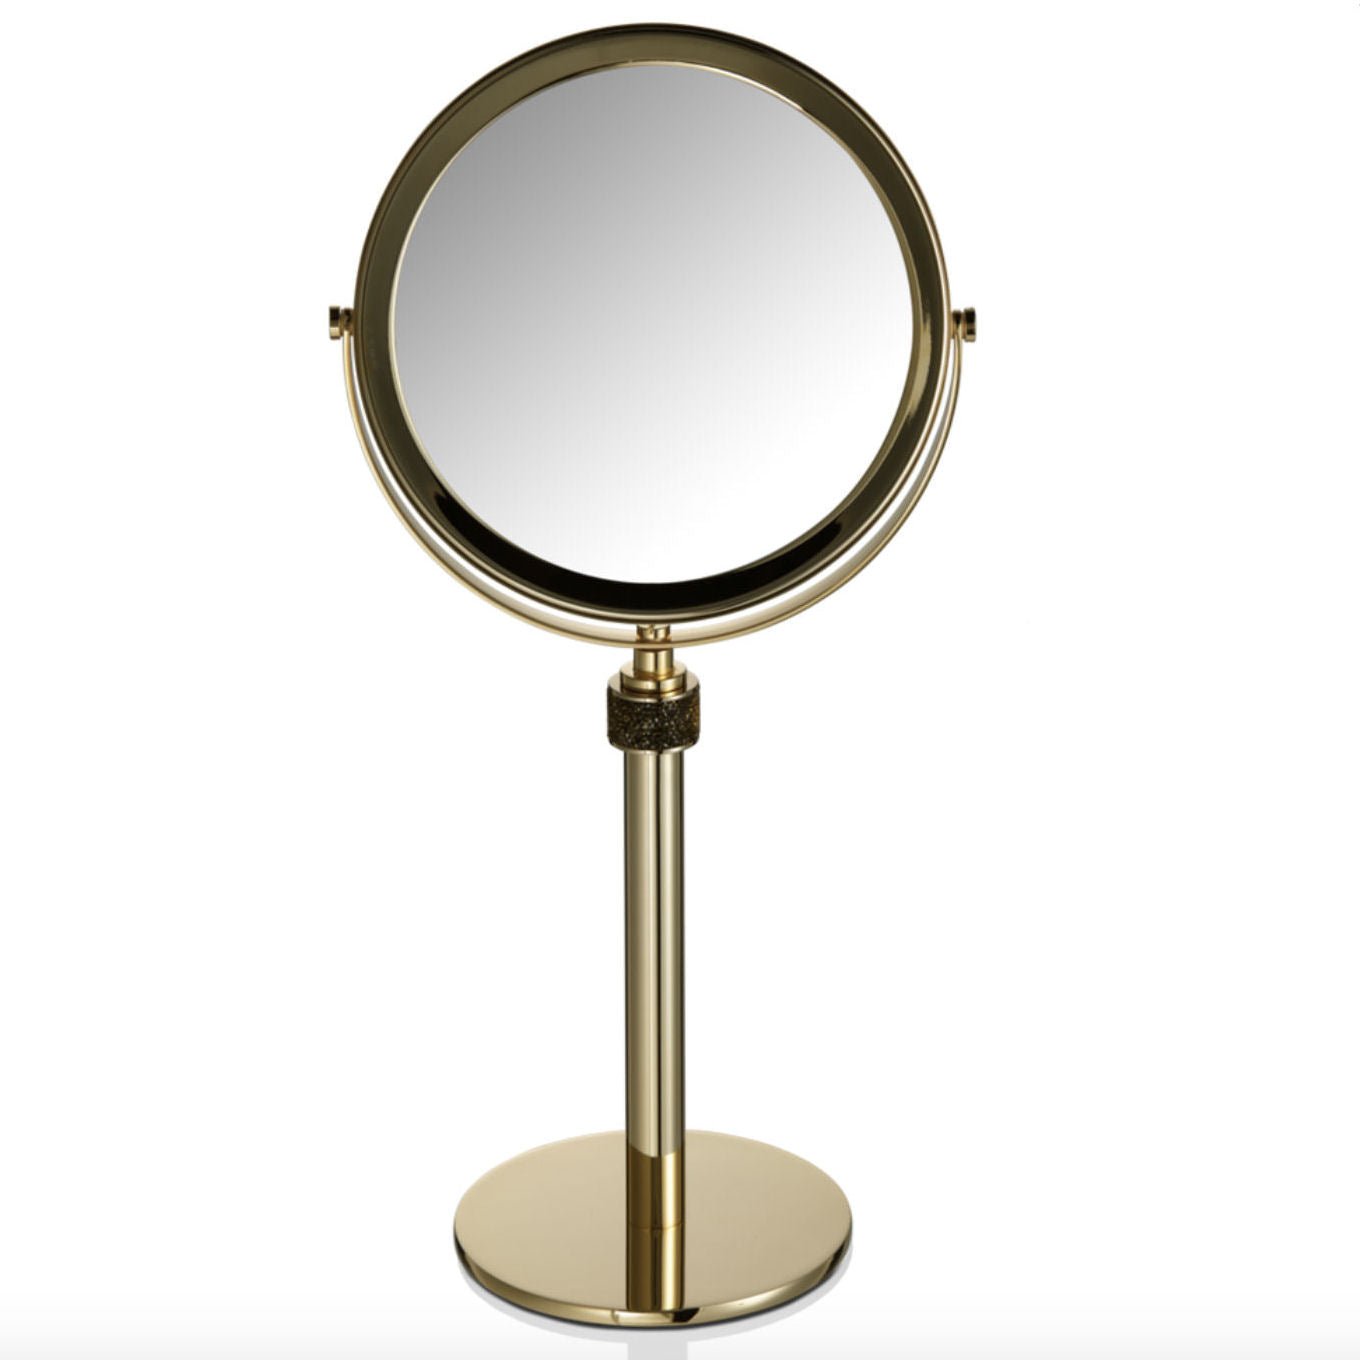 Luxury Decor Walther Cosmetic Mirror with Swarowski® Crystals - |VESIMI Design|